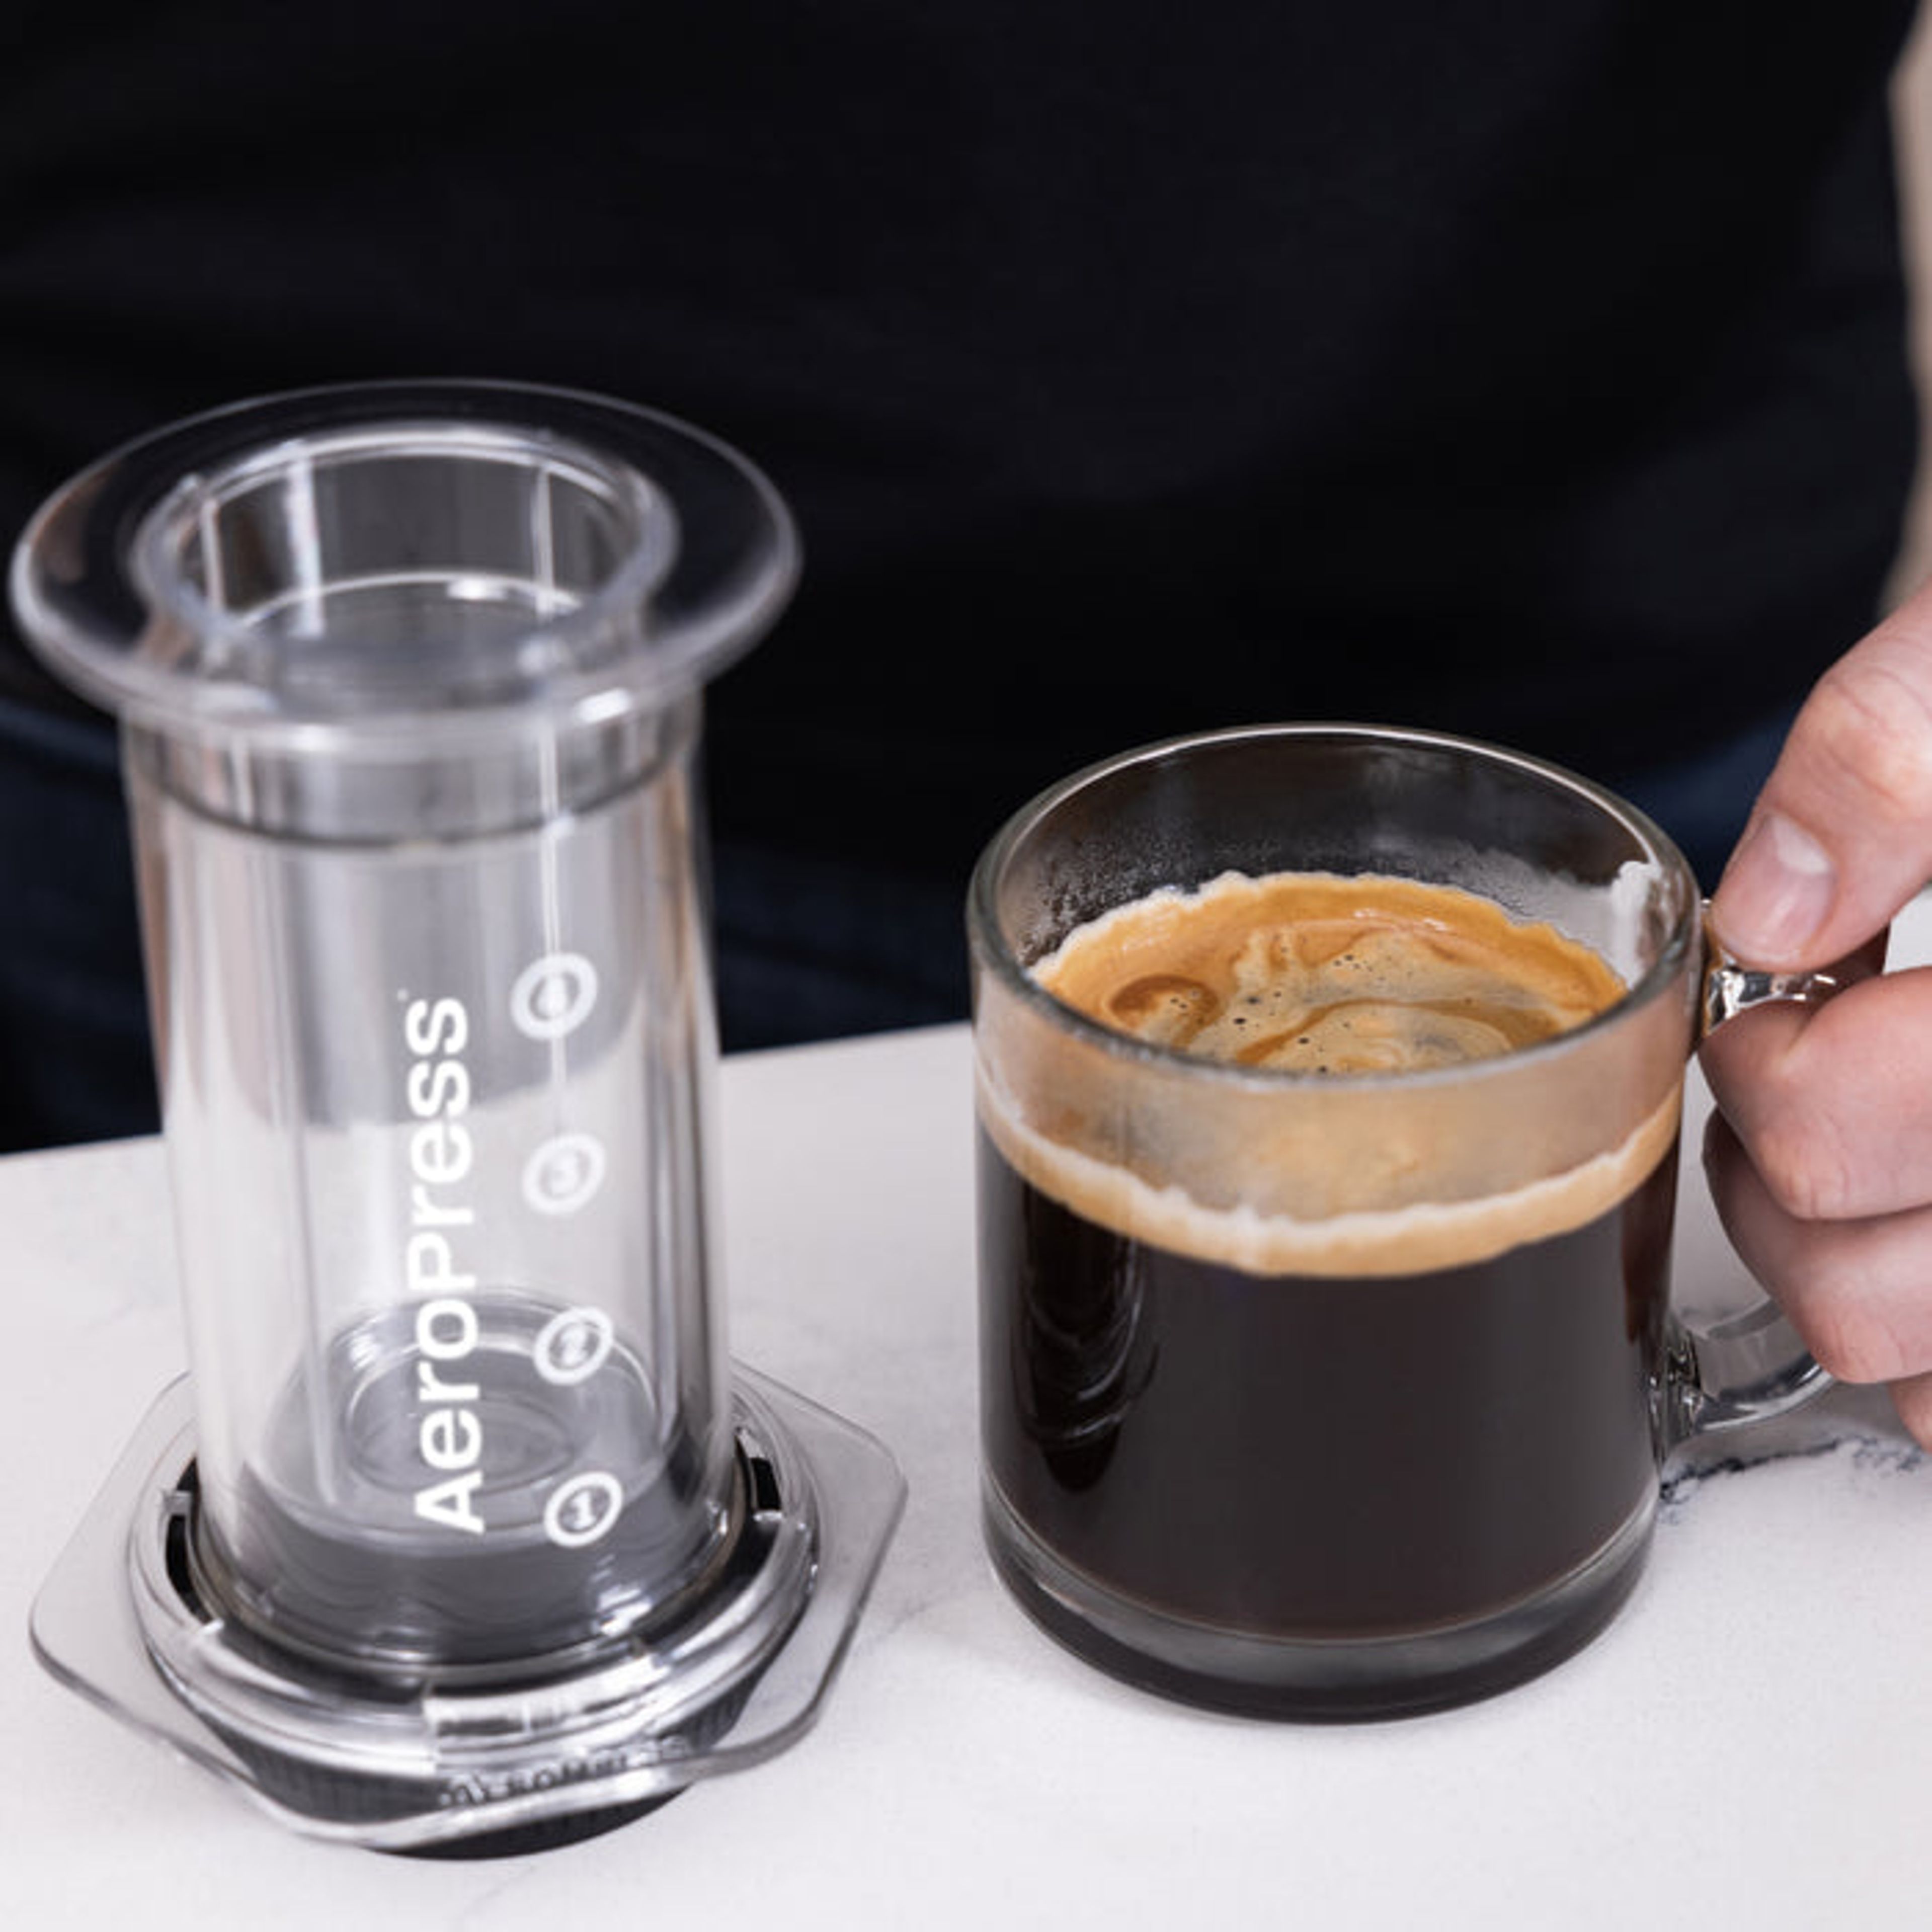 AeroPress Clear Coffee Maker & Stainless Steel Filter Bundle